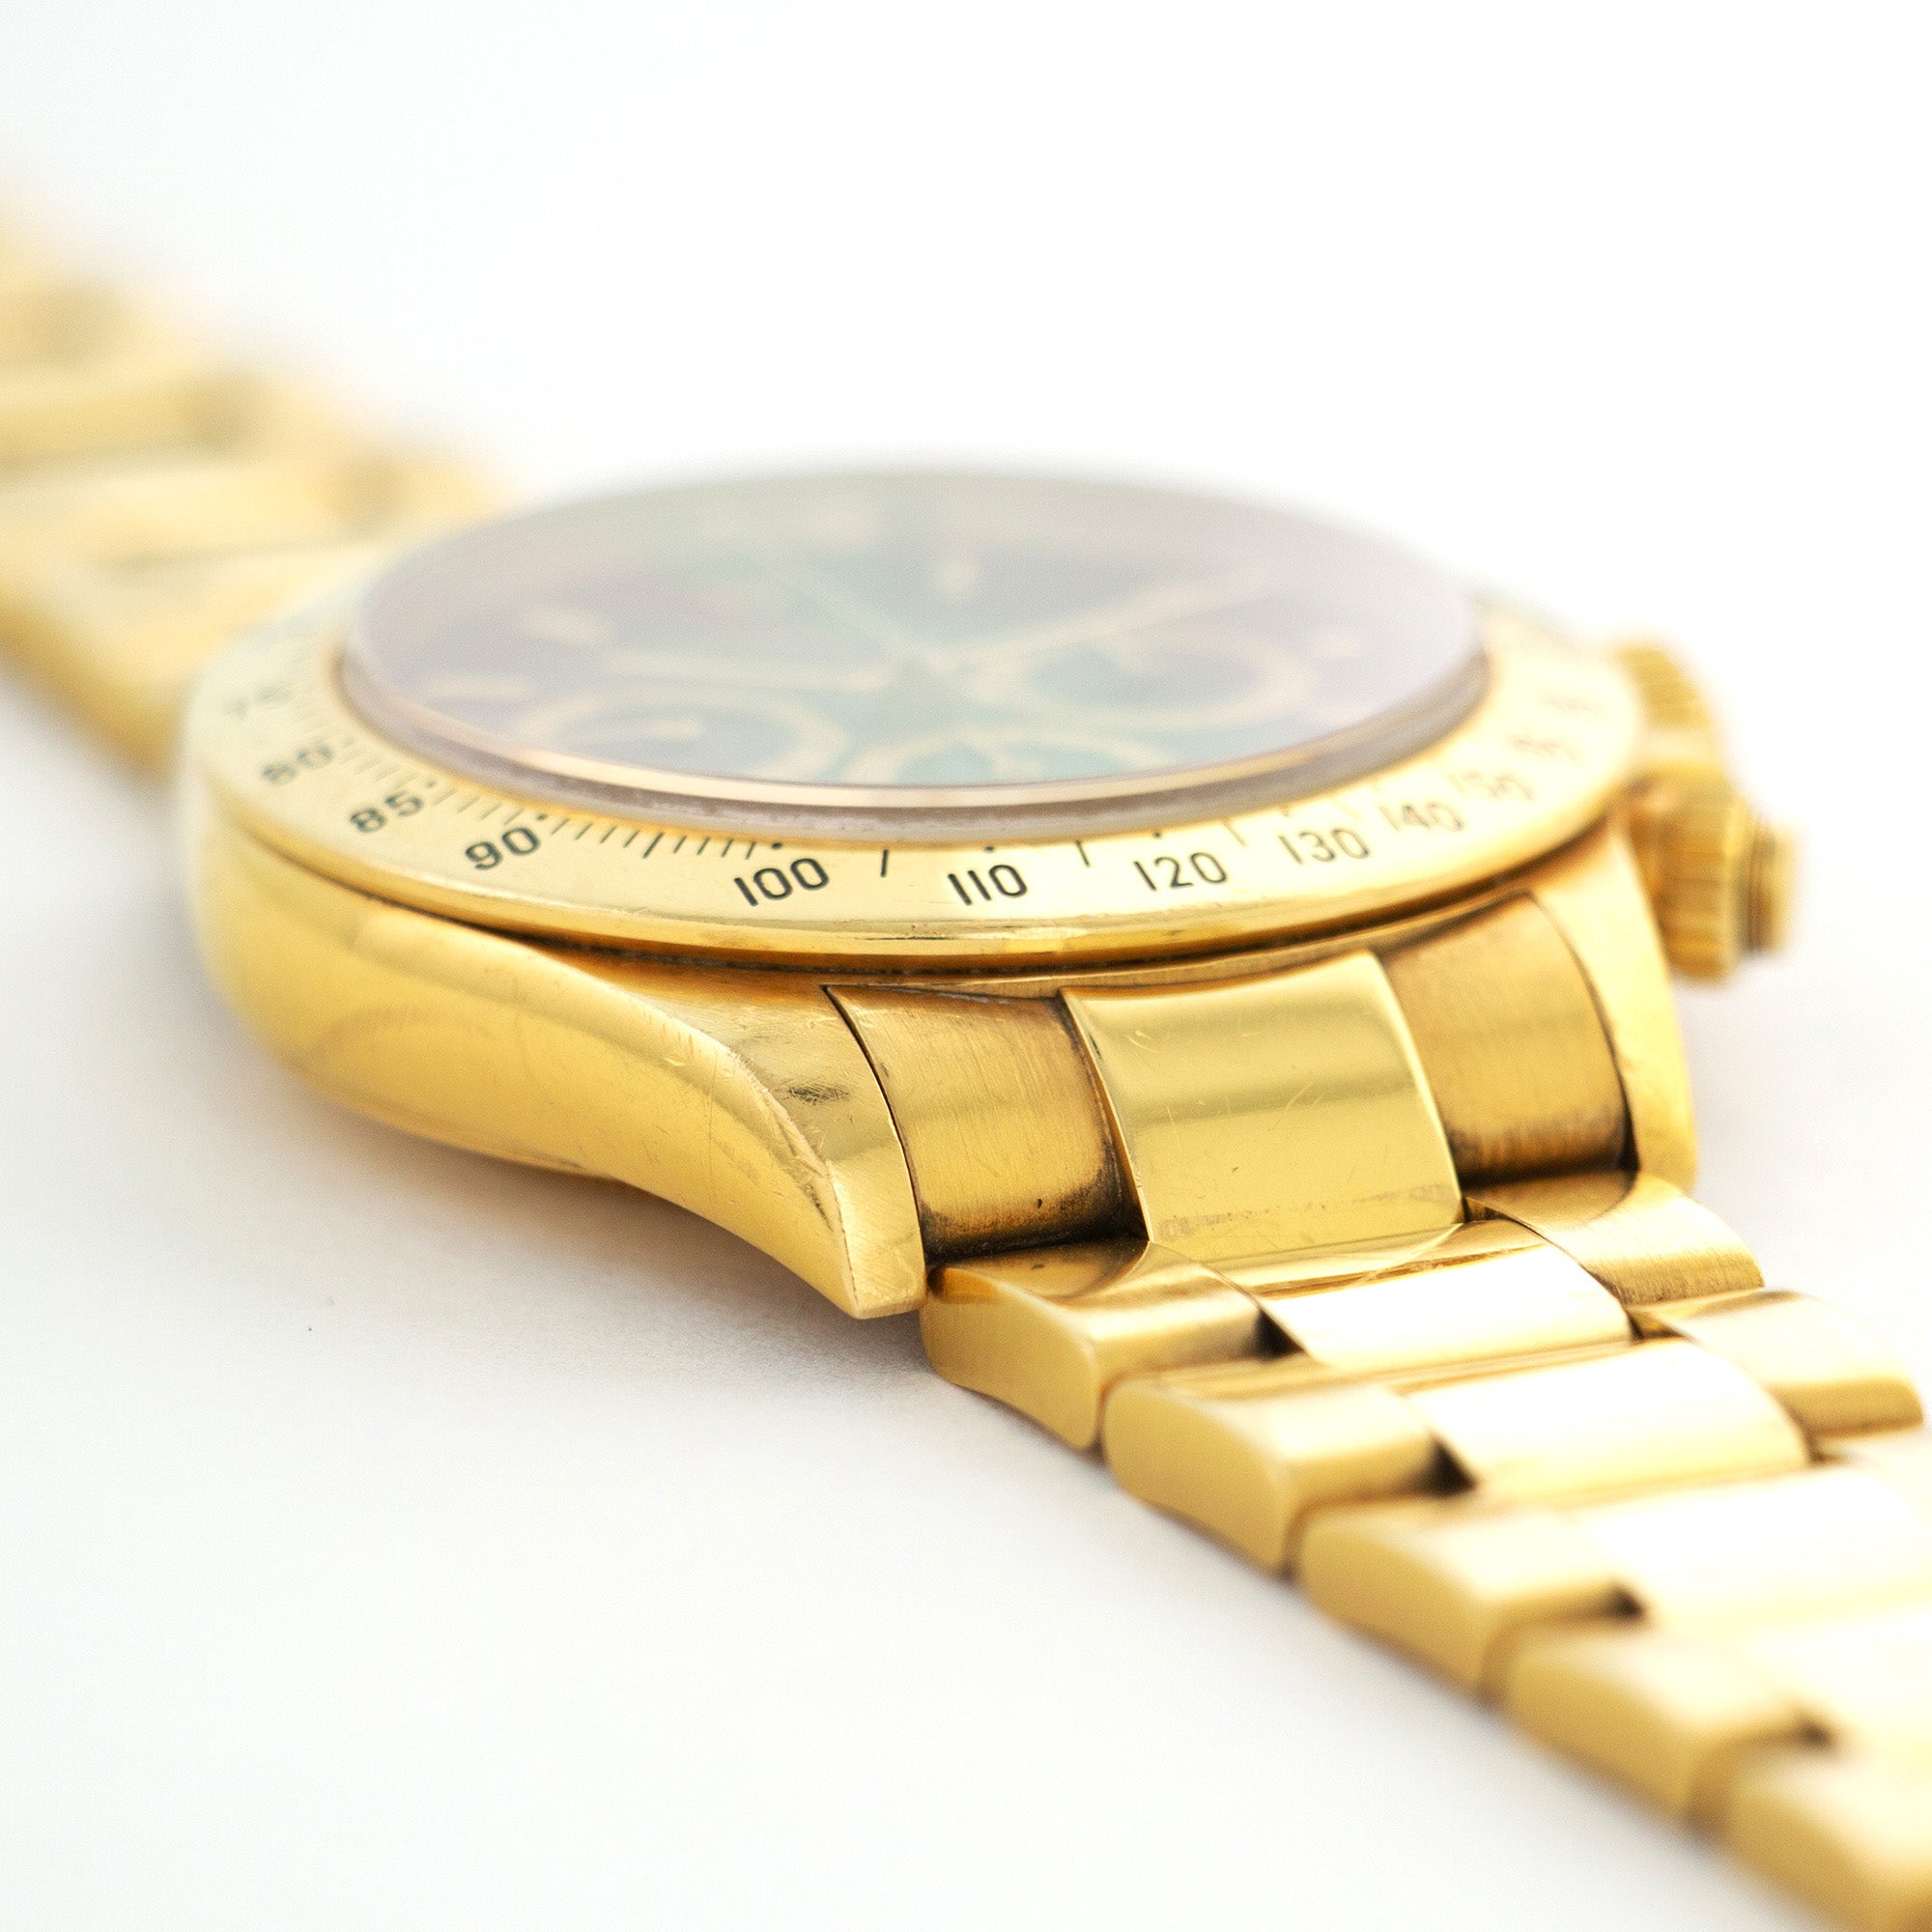 Rolex - Rolex Yellow Gold Cosmograph R-Series Floating Daytona Watch Ref. 16528 - The Keystone Watches